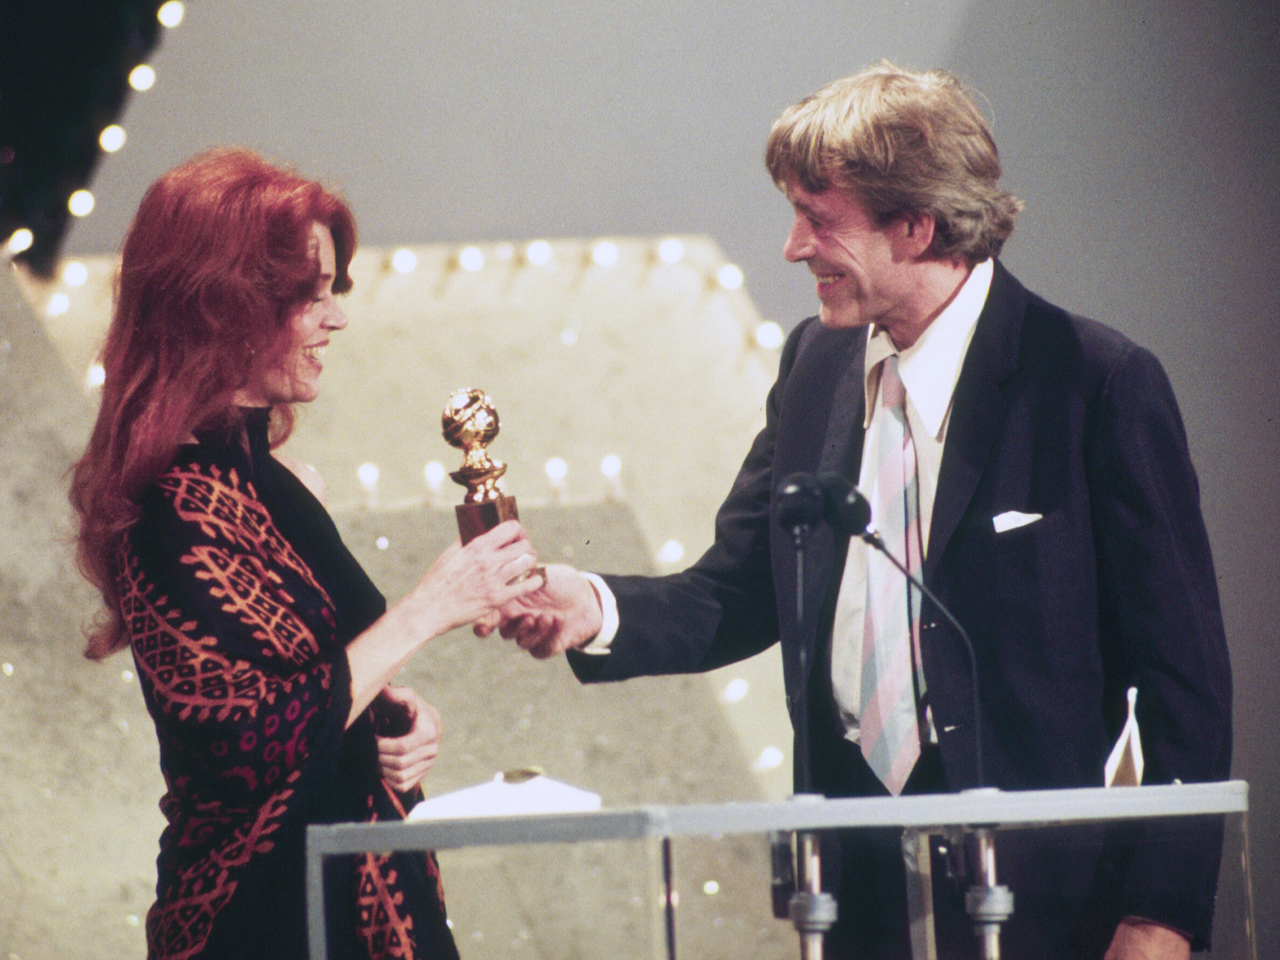 Jane Fonda winning best actress in the 1978 Golden Globes.